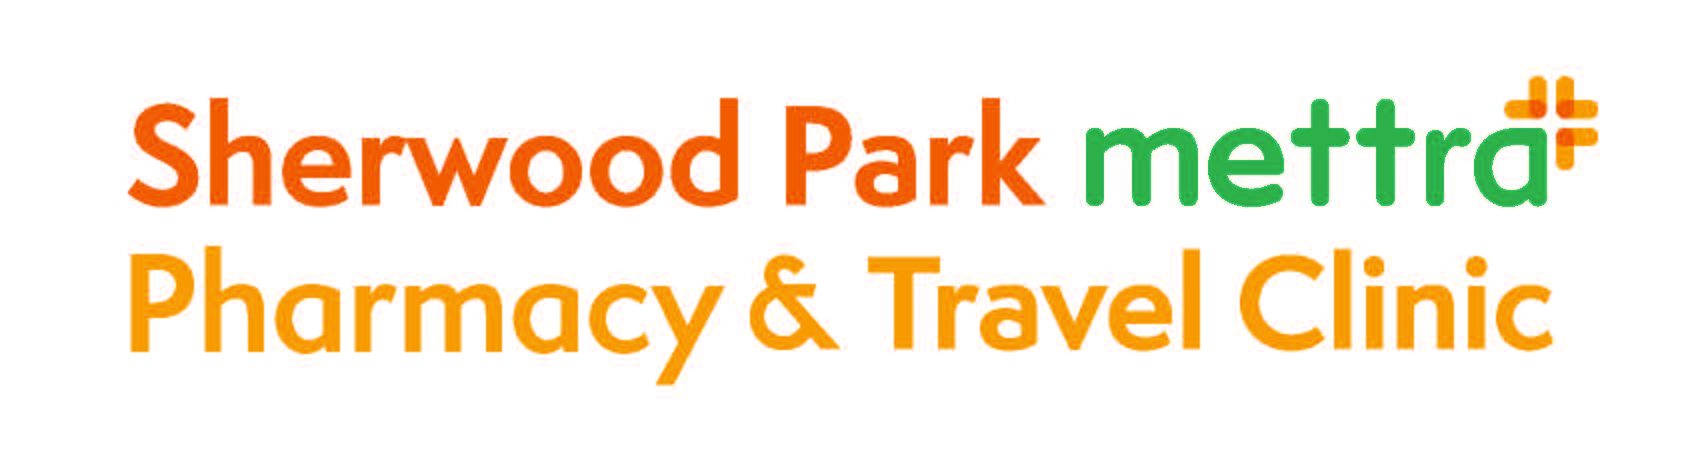 Sherwood Park mettra Pharmacy logo